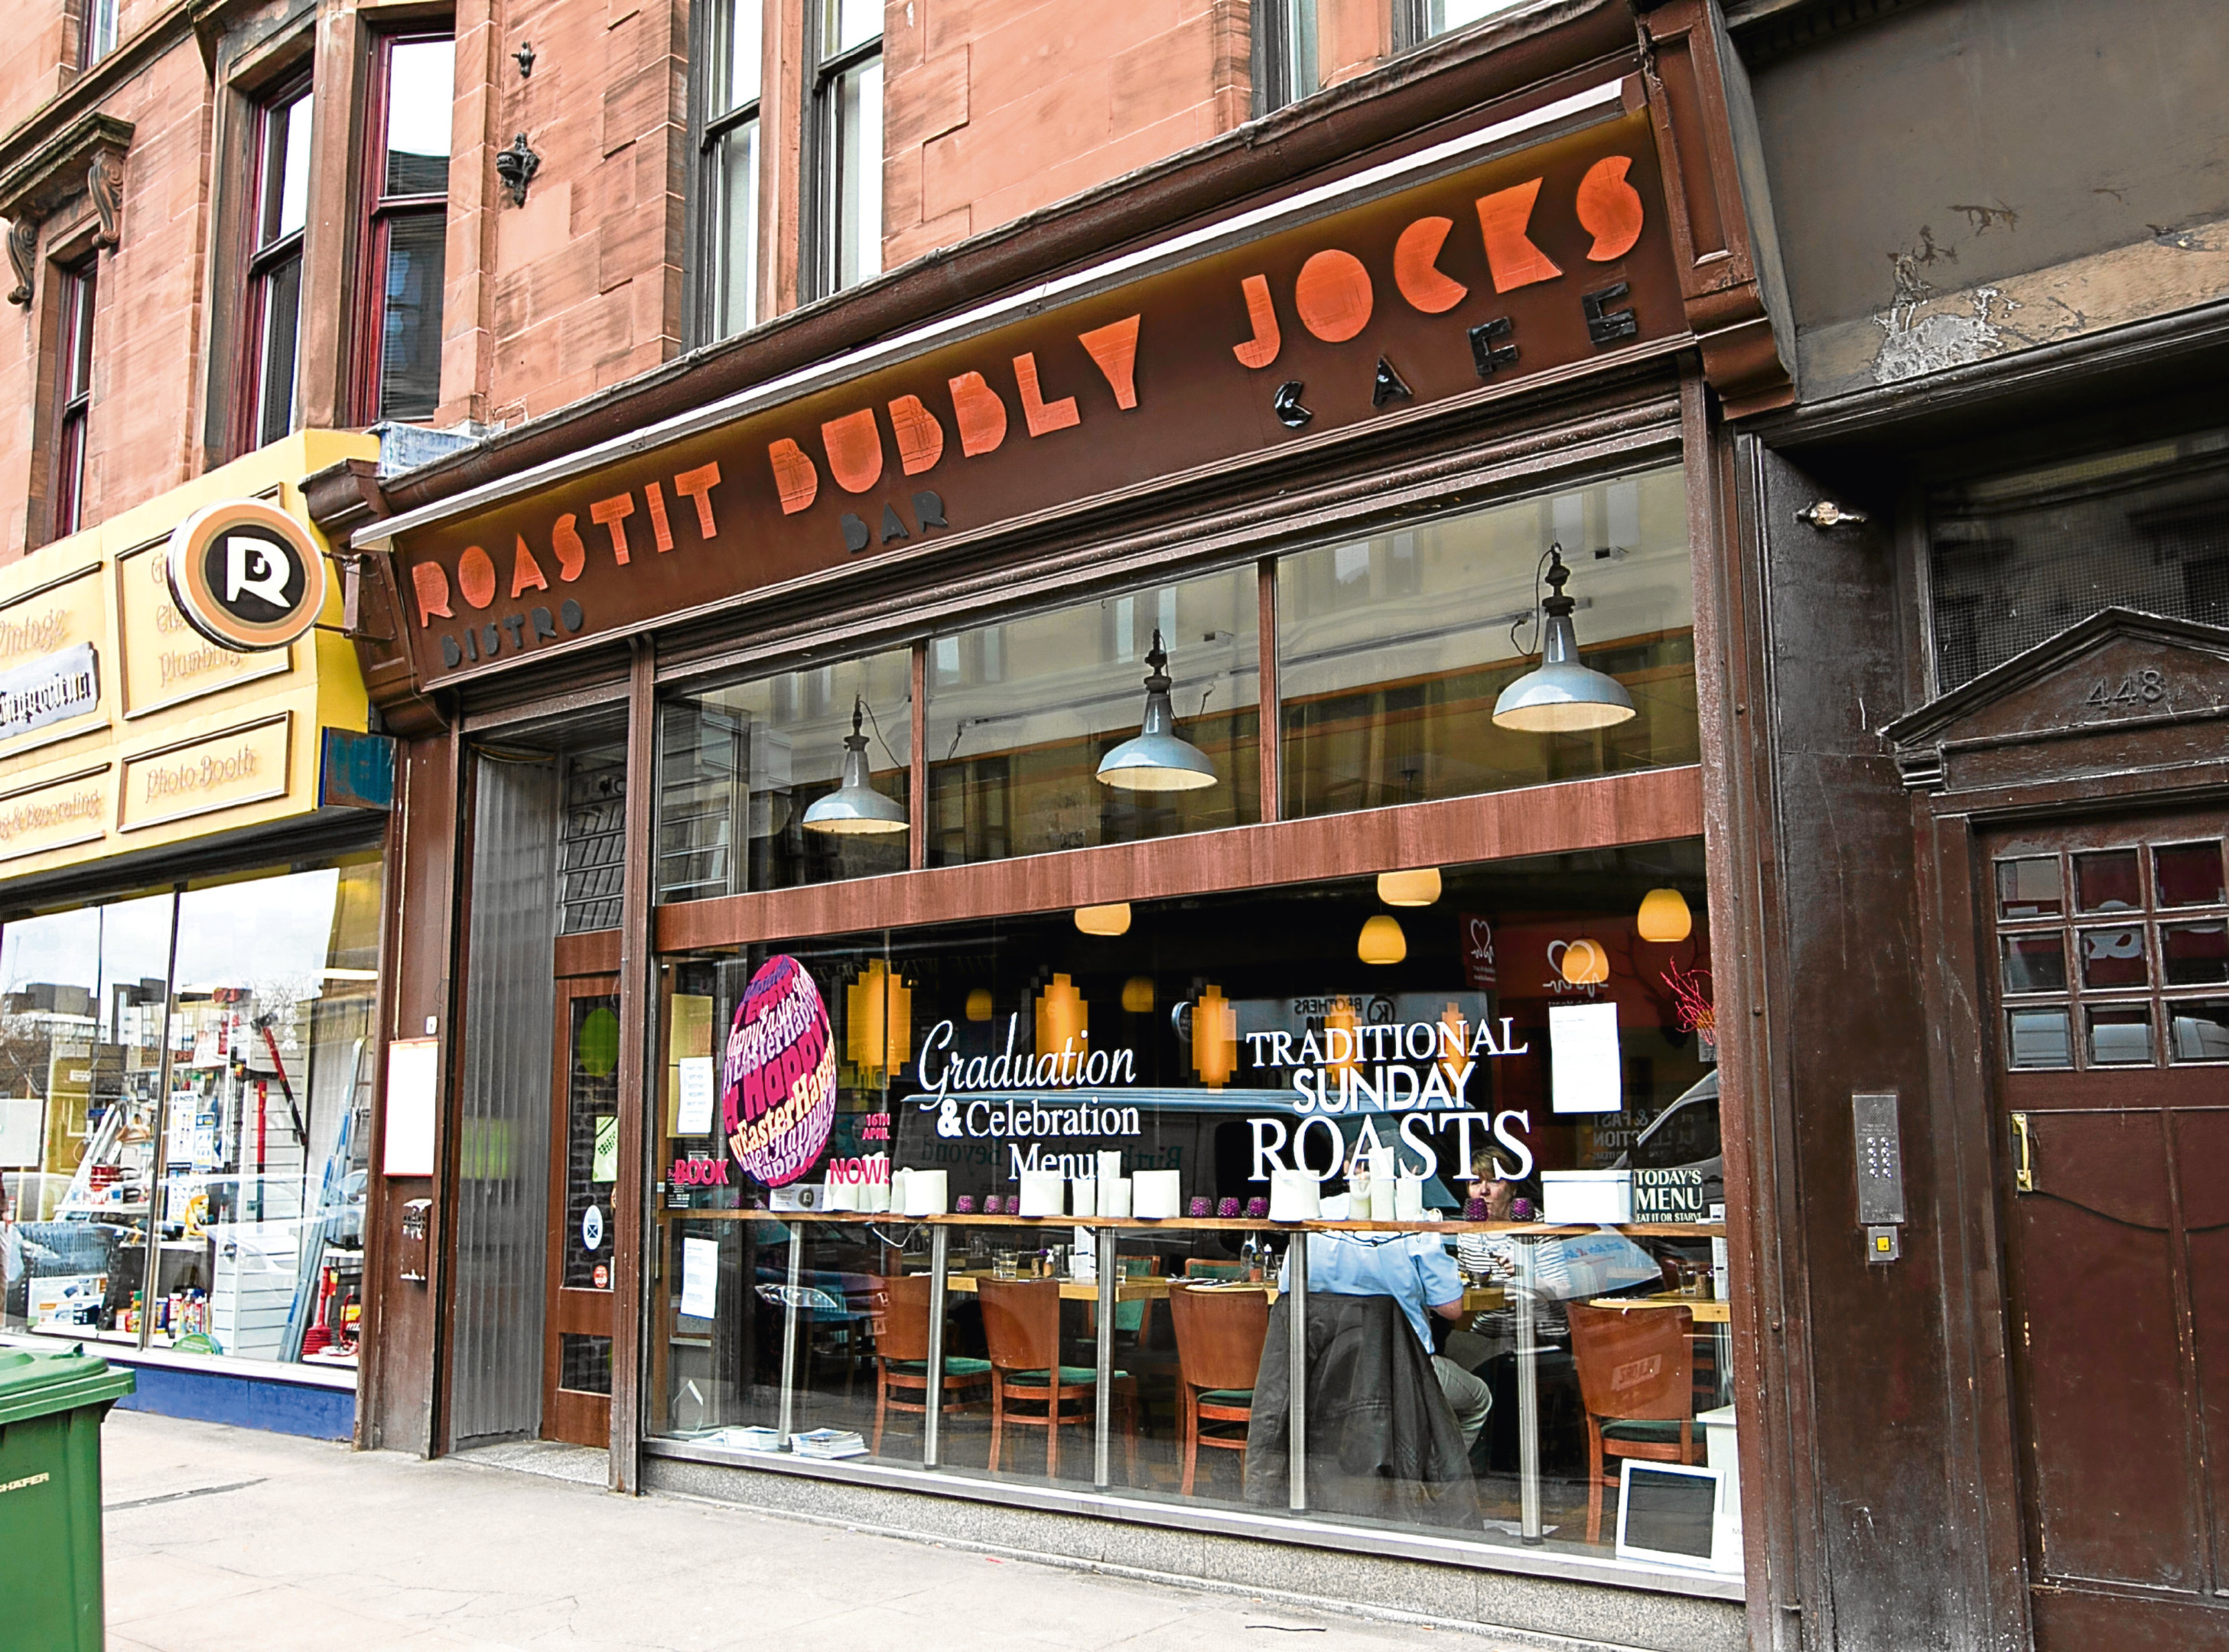 Restaurant Review Roastit Bubbly Jocks Glasgow The Sunday Post 